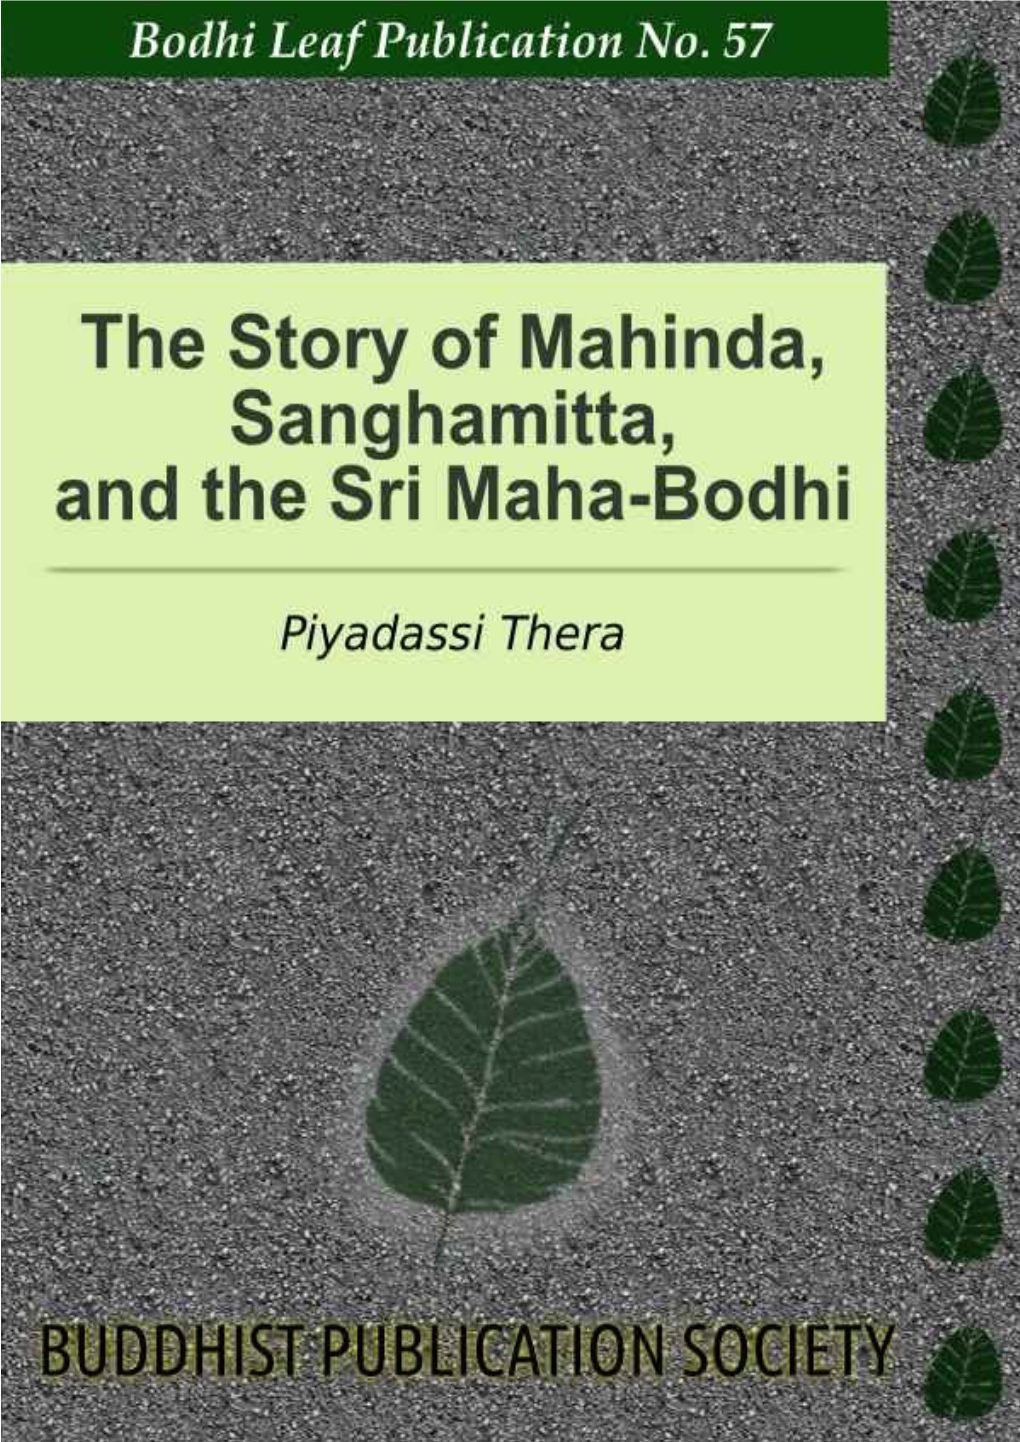 Mahinda, Sanghamitta, and the Maha-Bodhi